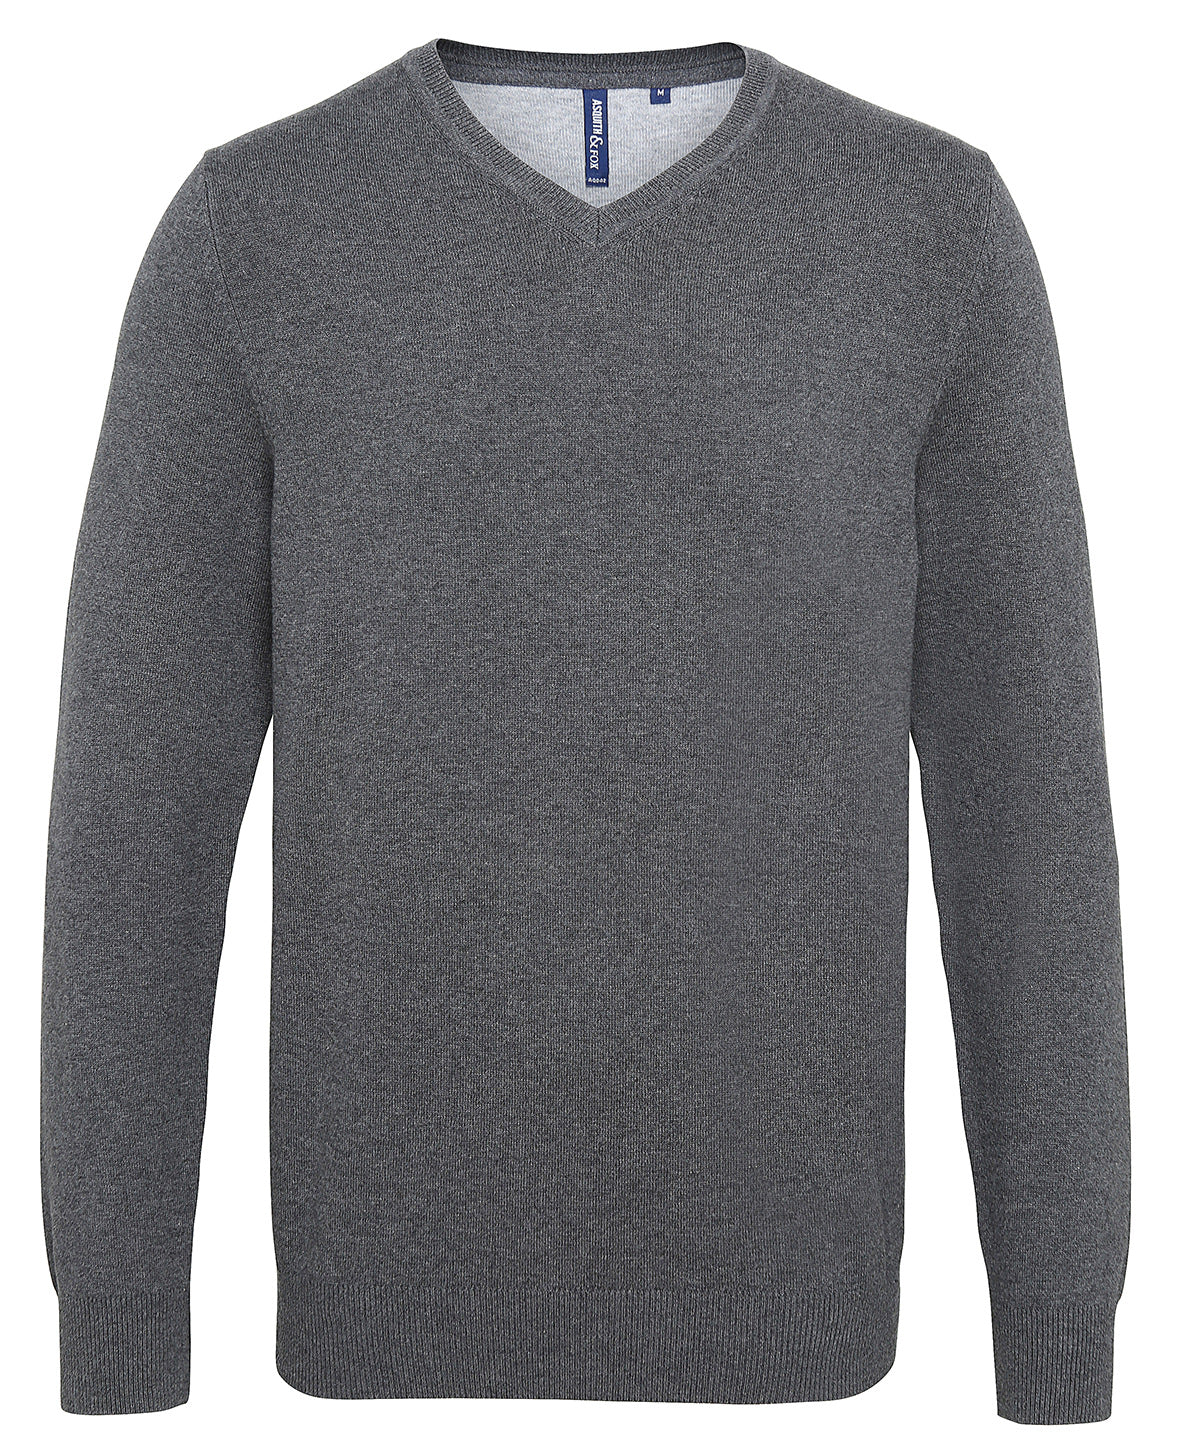 Prjónaðar peysur - Men's Cotton Blend V-neck Sweater